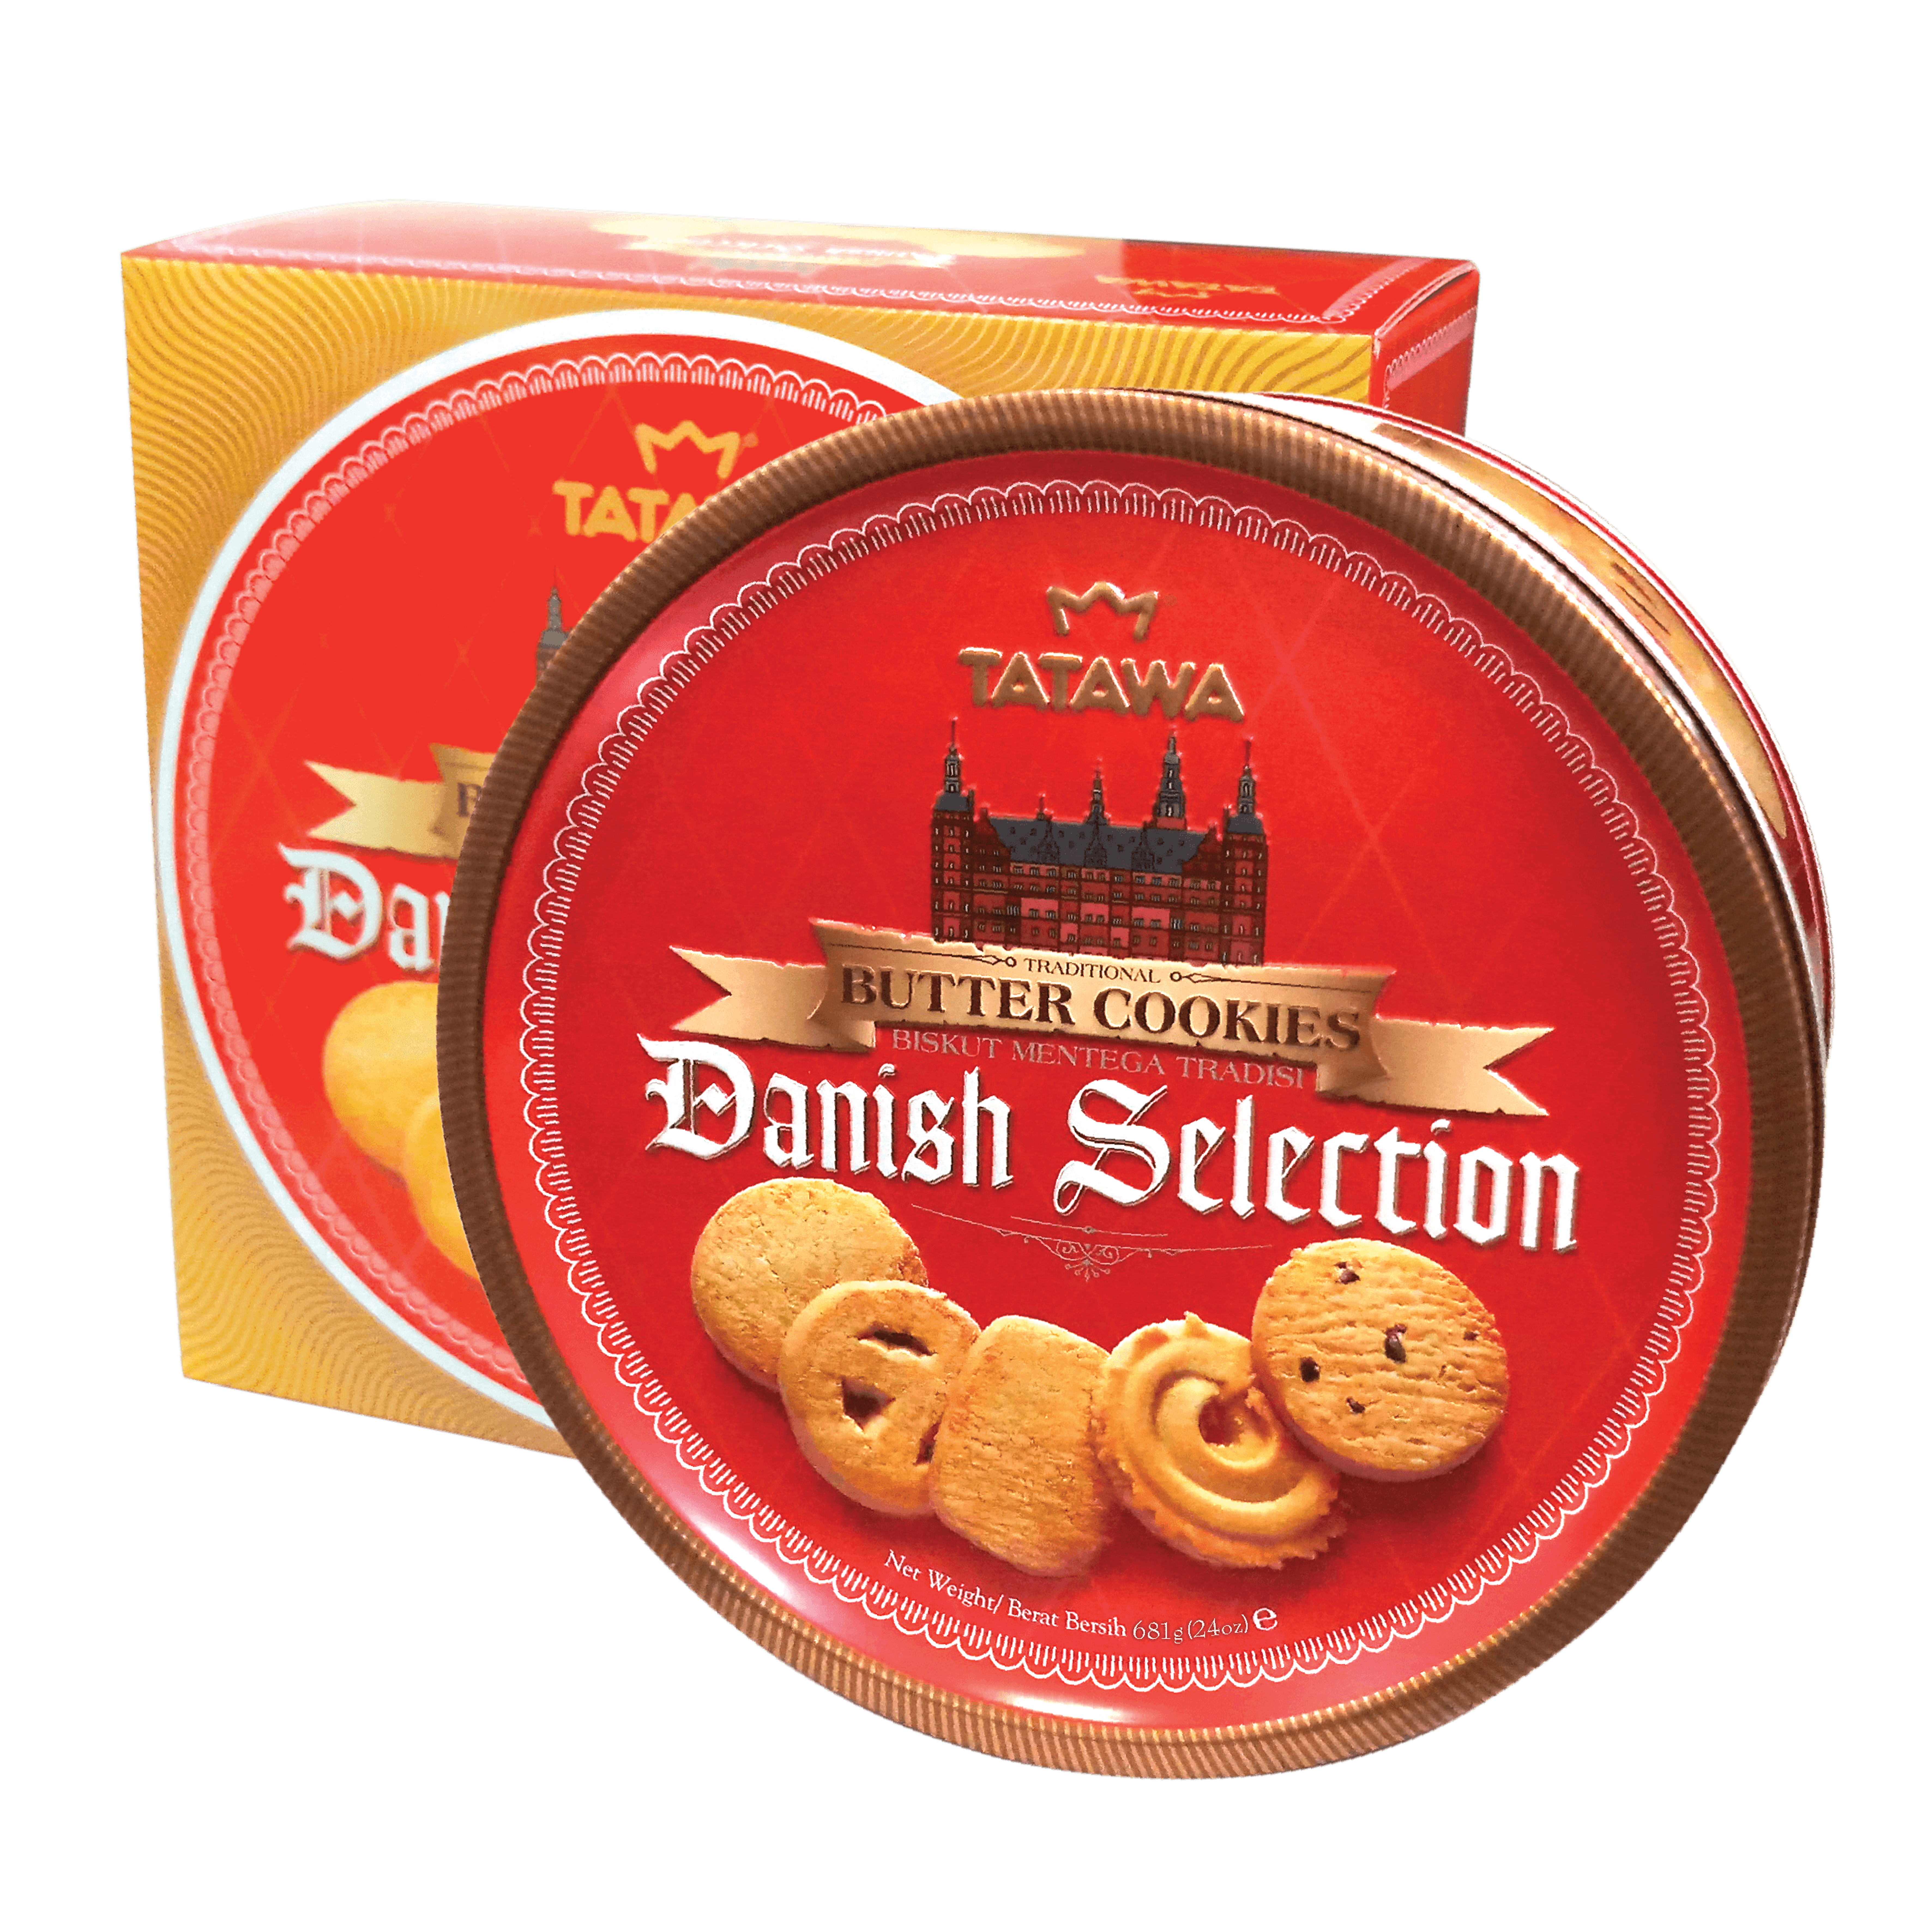 Danish Selection 681g Red tin